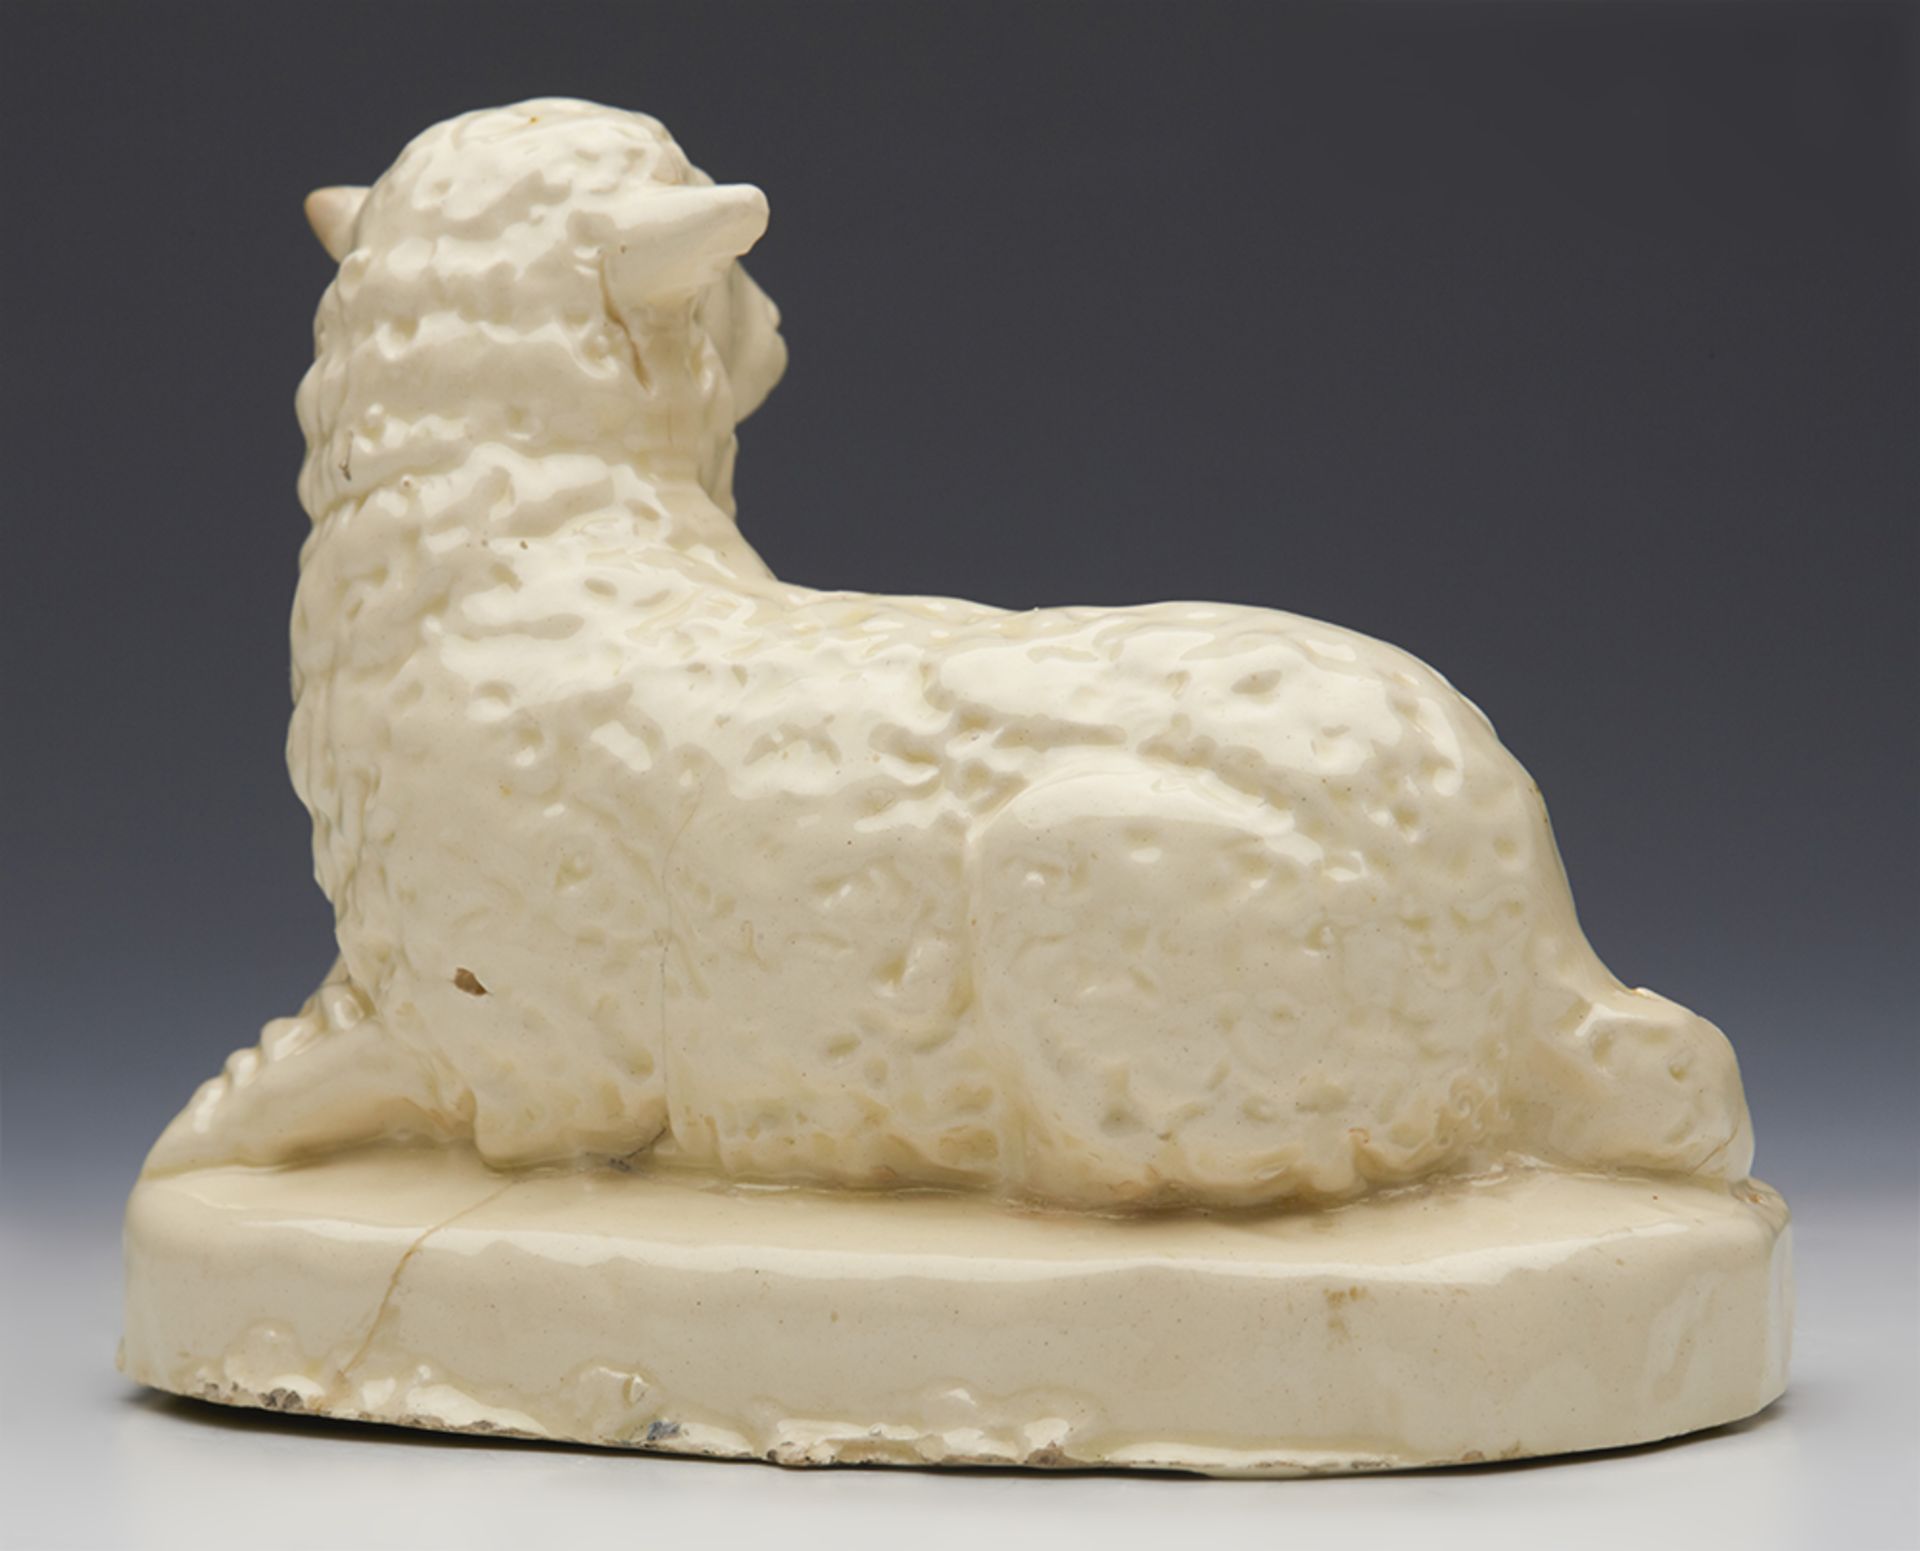 ANTIQUE ENGLISH CREAMWARE POTTERY RECUMBENT SHEEP FIGURE c.1800 - Image 4 of 10